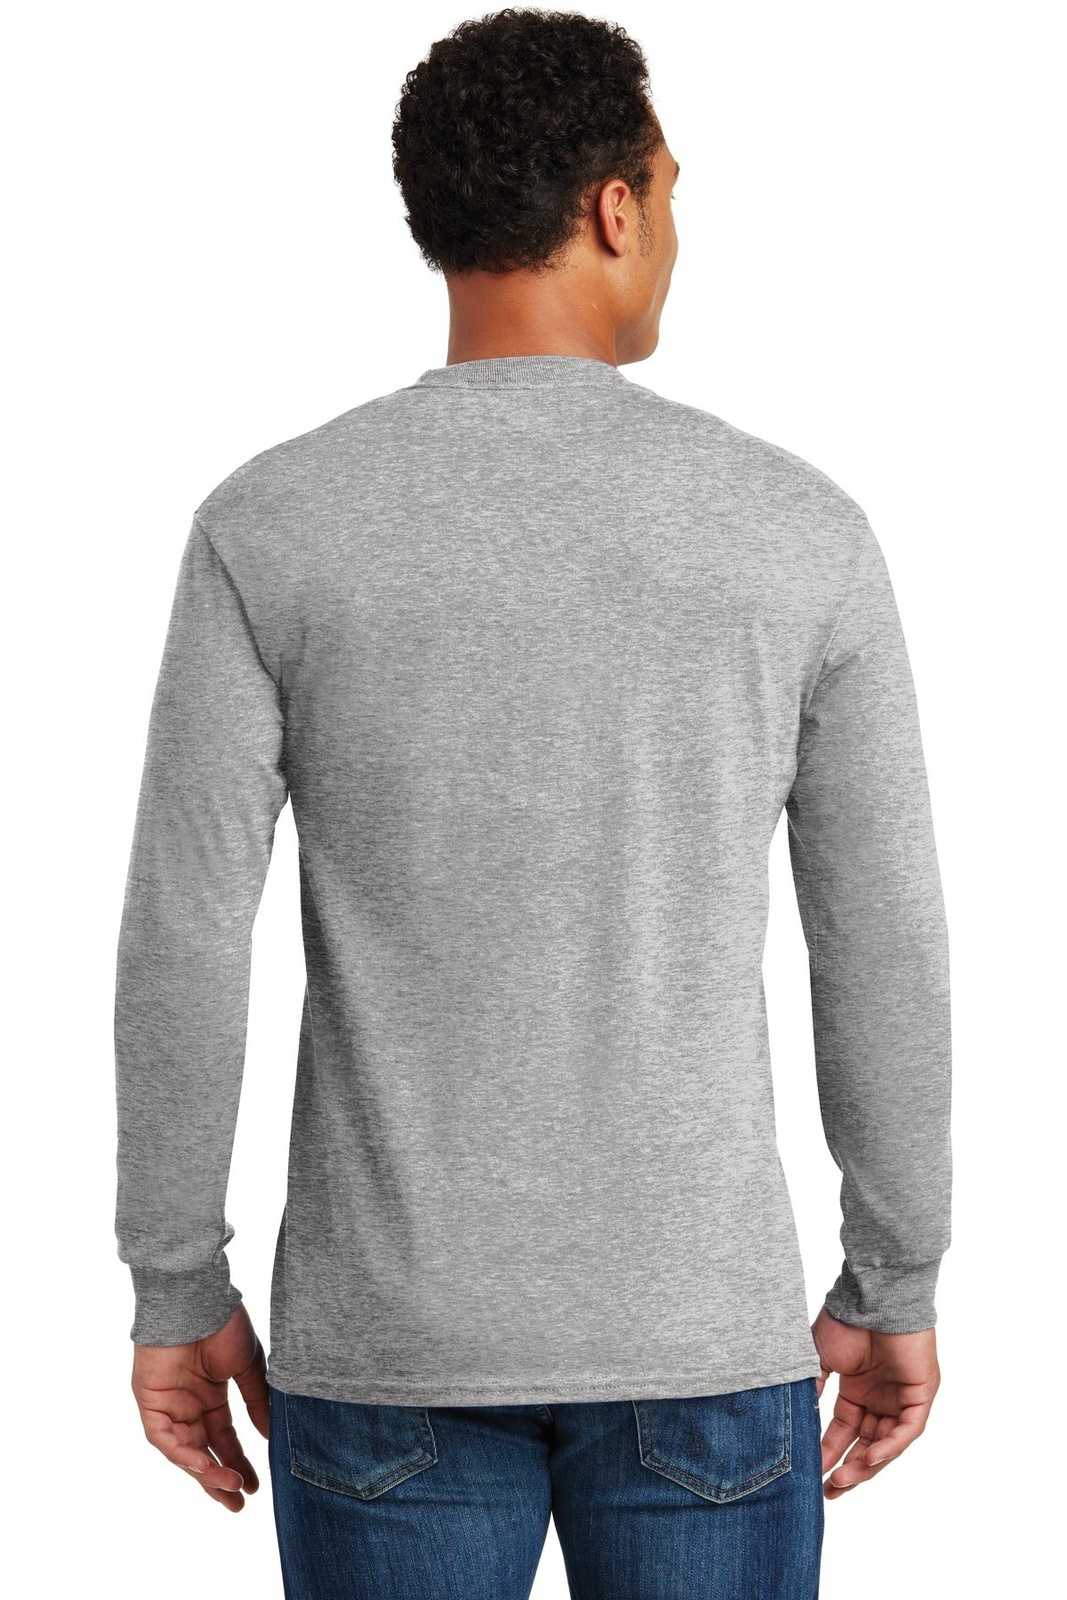 Gildan 5400 Heavy Cotton 100% Cotton Long Sleeve T-Shirt - Sport Gray